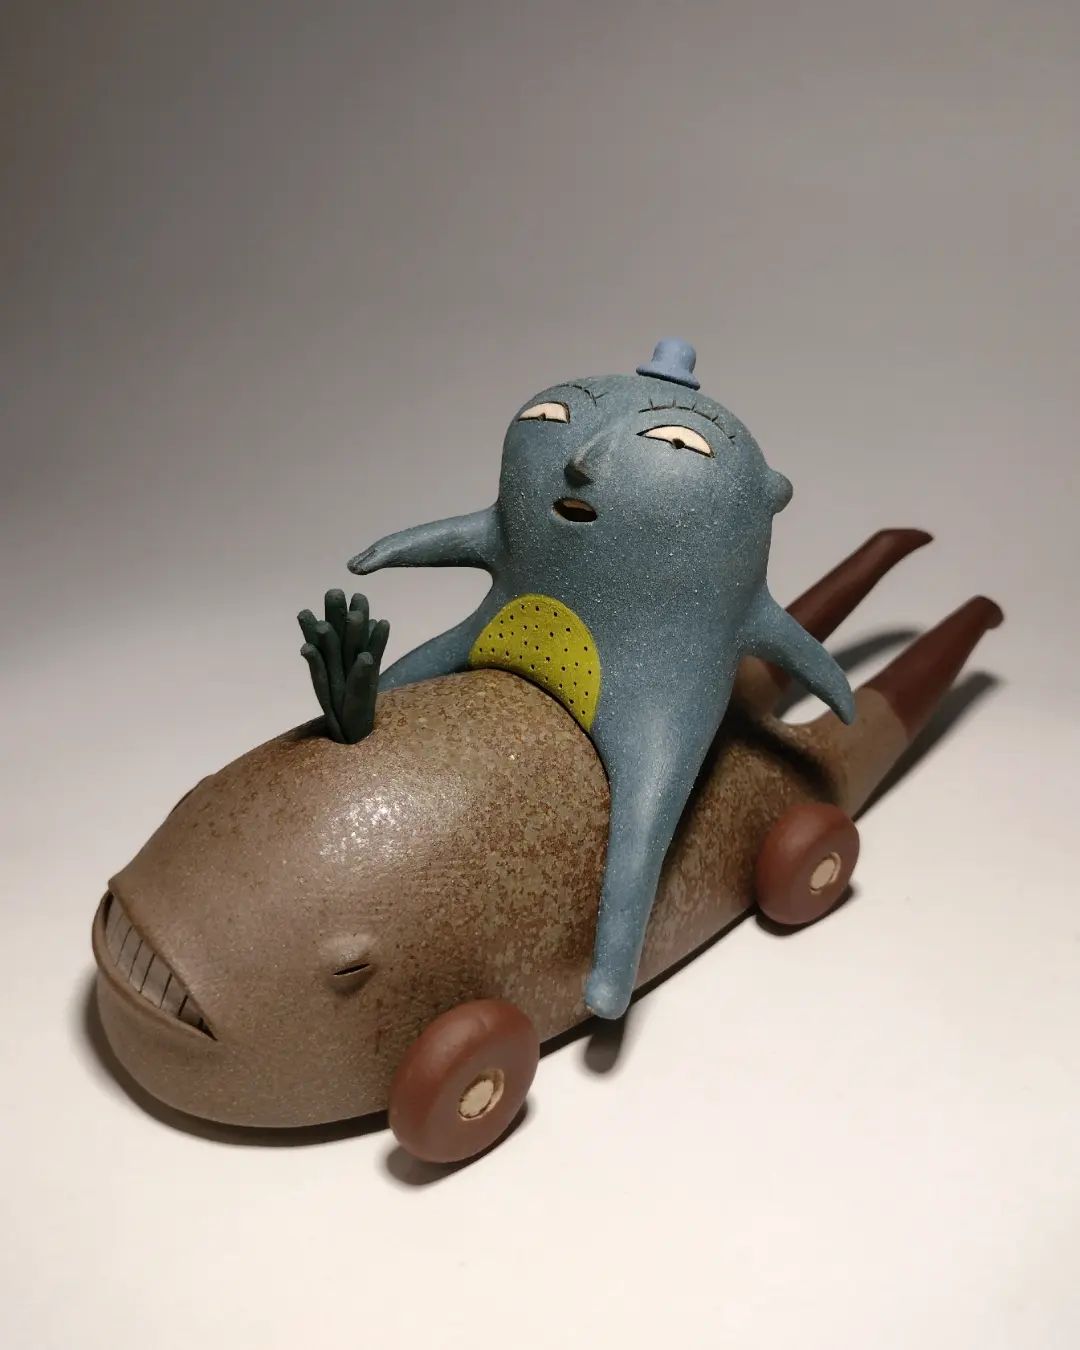 Amusing Ceramic Sculptures Of Quirky Creatures By Luciano Polverigiani (34)